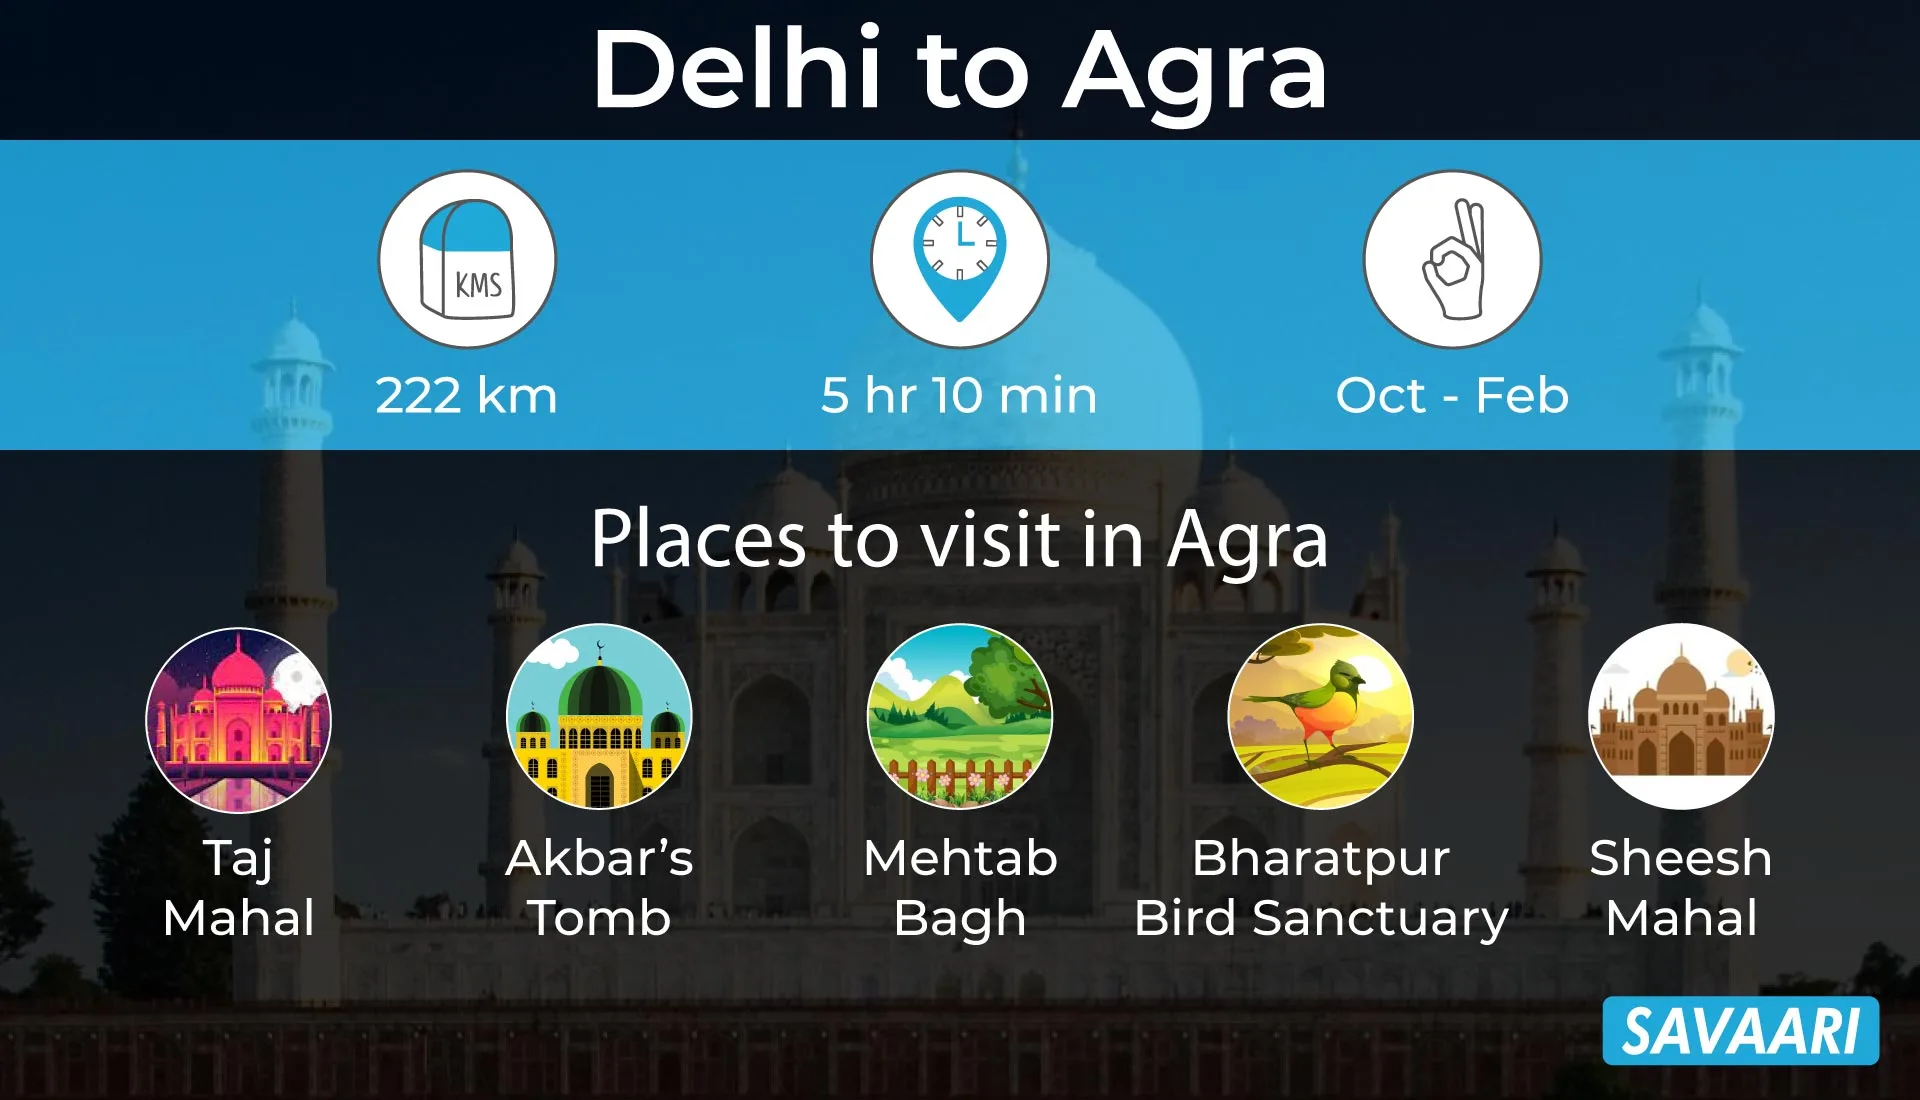 Delhi to Agra visit Taj Mahal by car